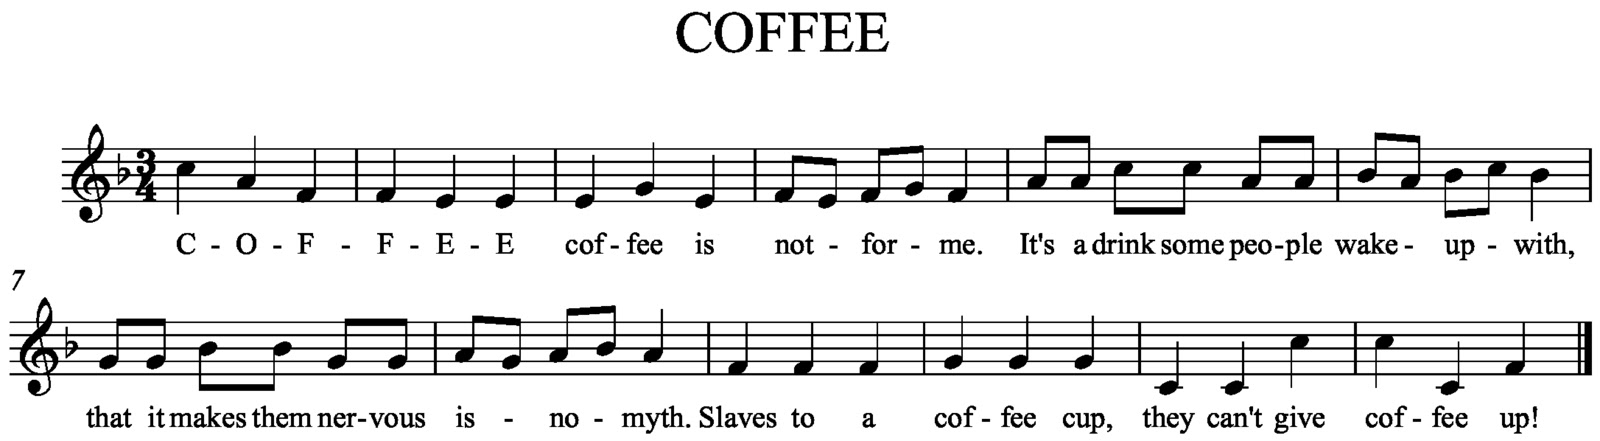 coffee song